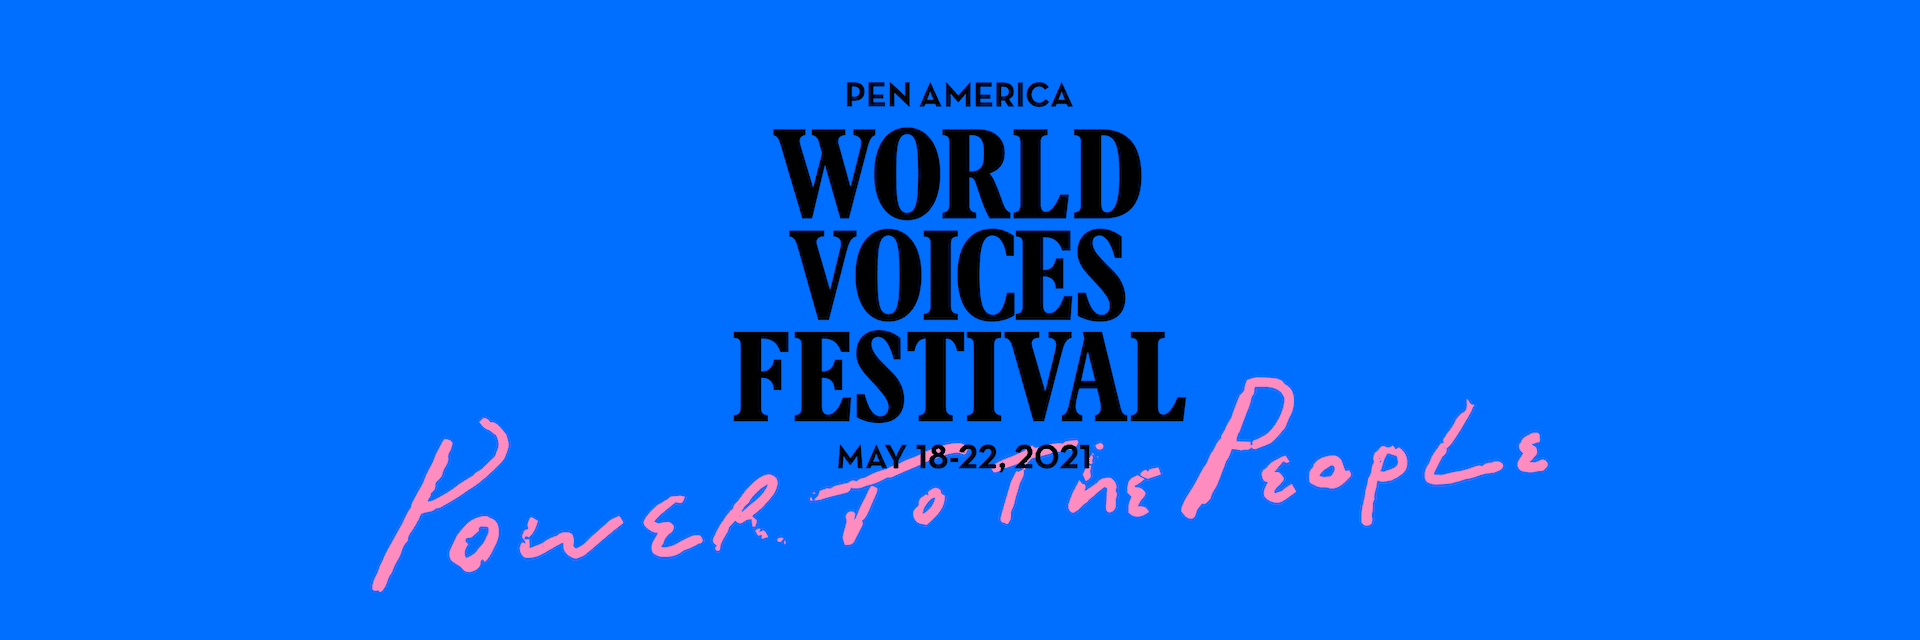 2021 World Voices Festival Hero Image